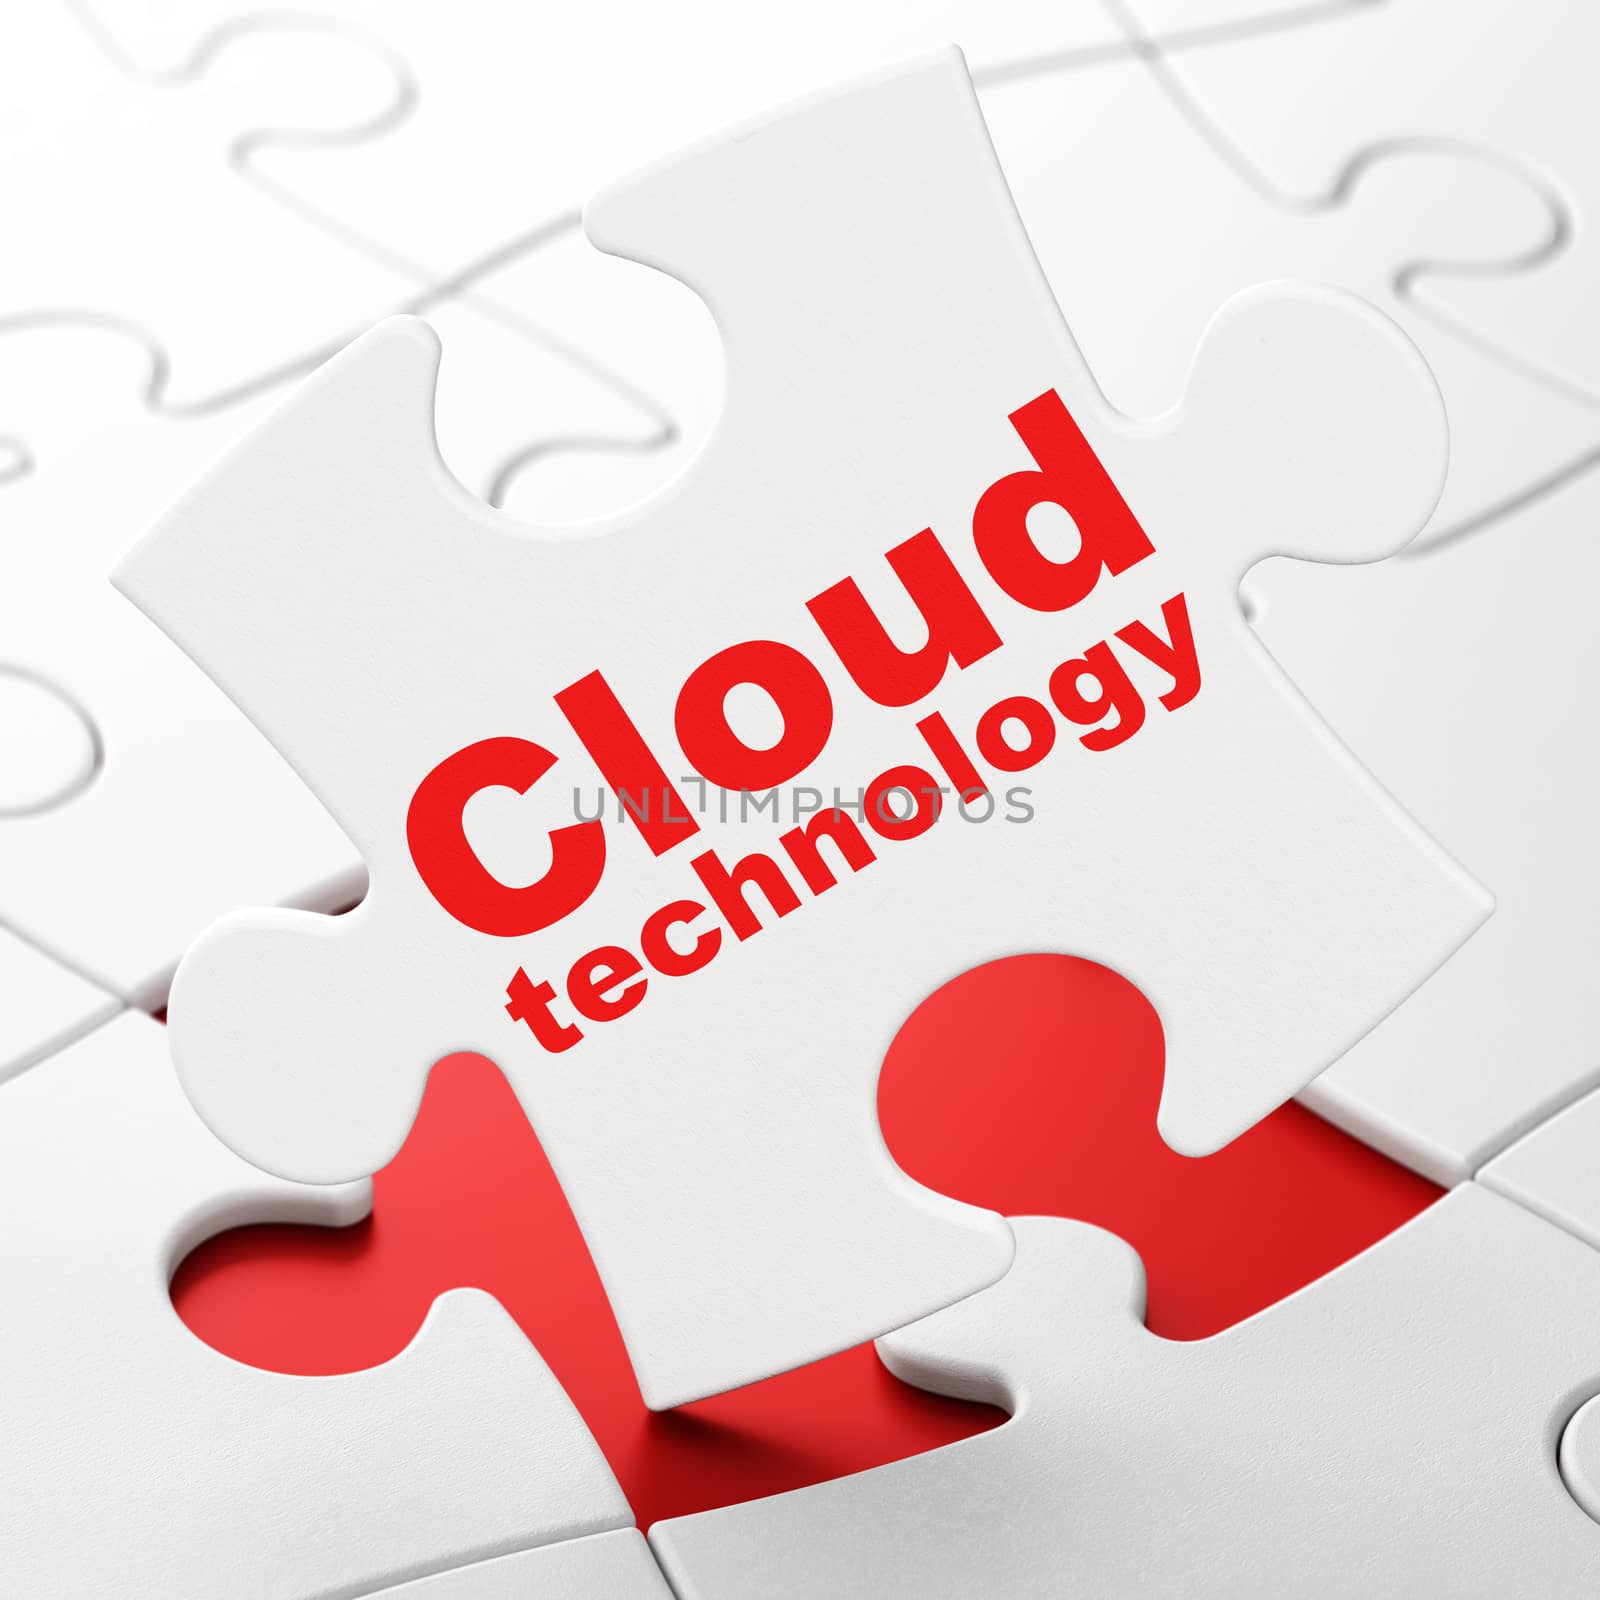 Cloud networking concept: Cloud Technology on White puzzle pieces background, 3d render